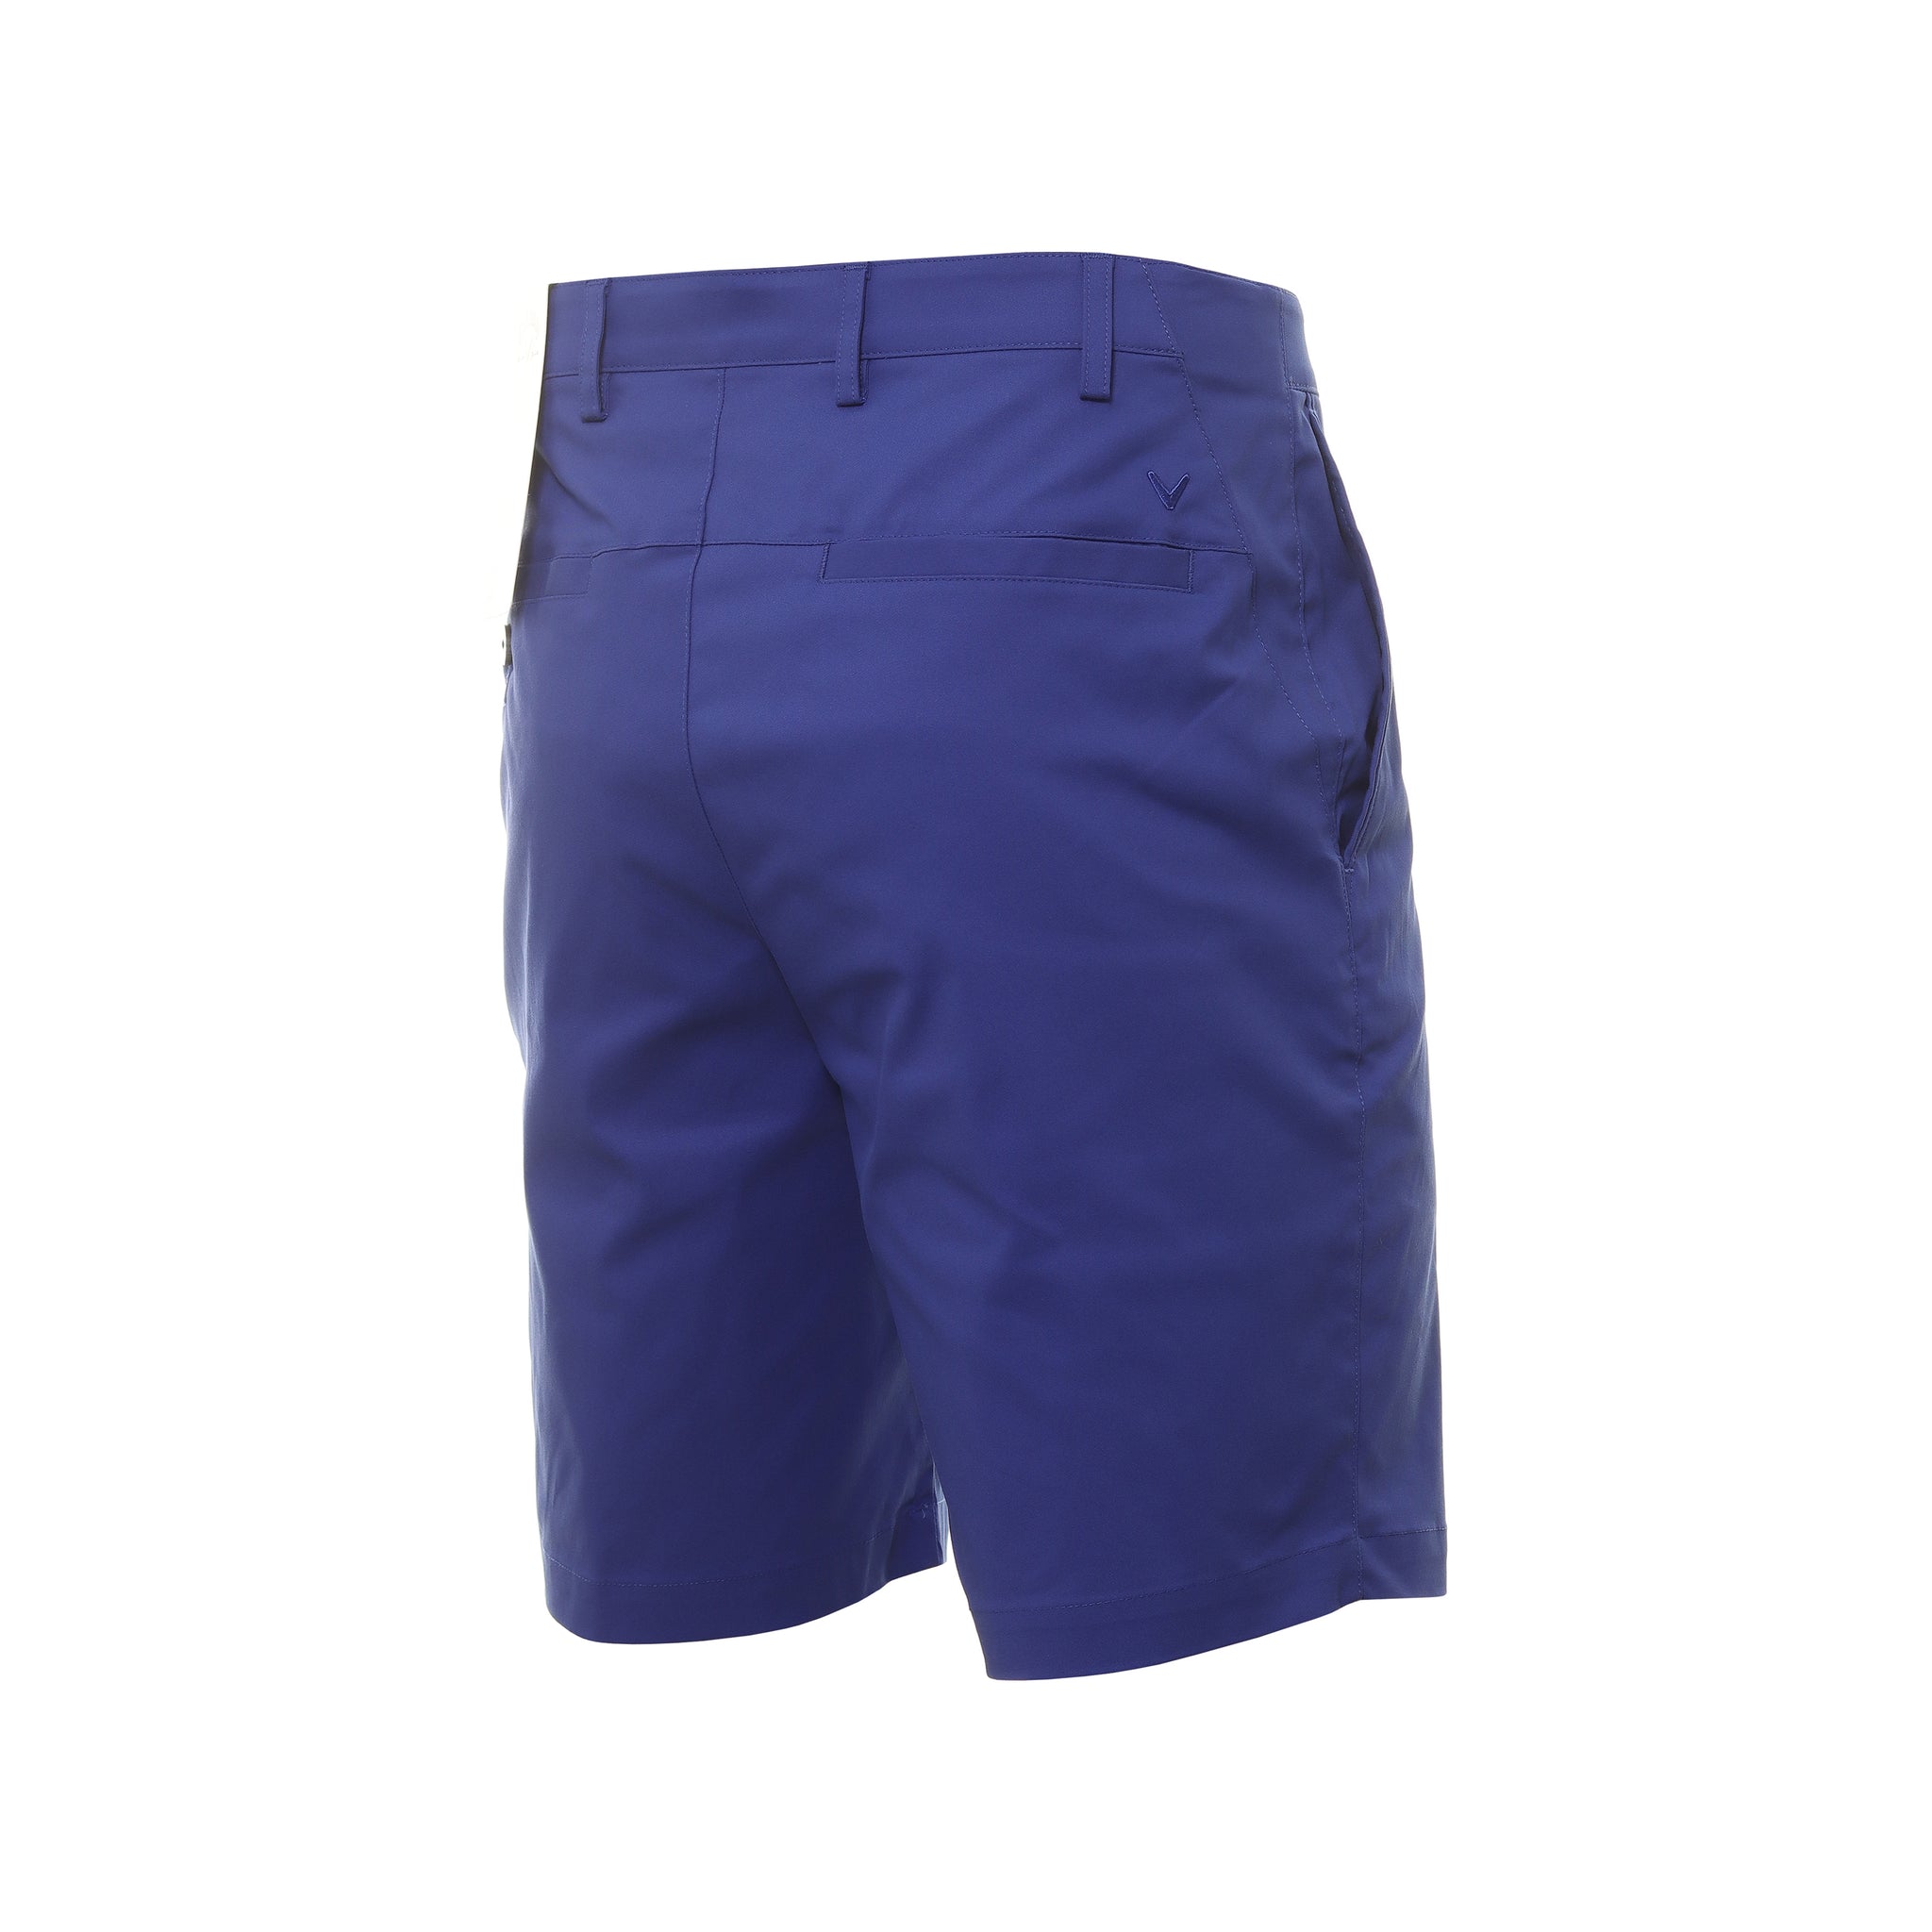 callaway-golf-x-series-flat-front-shorts-cgbsc053-clematis-blue-403